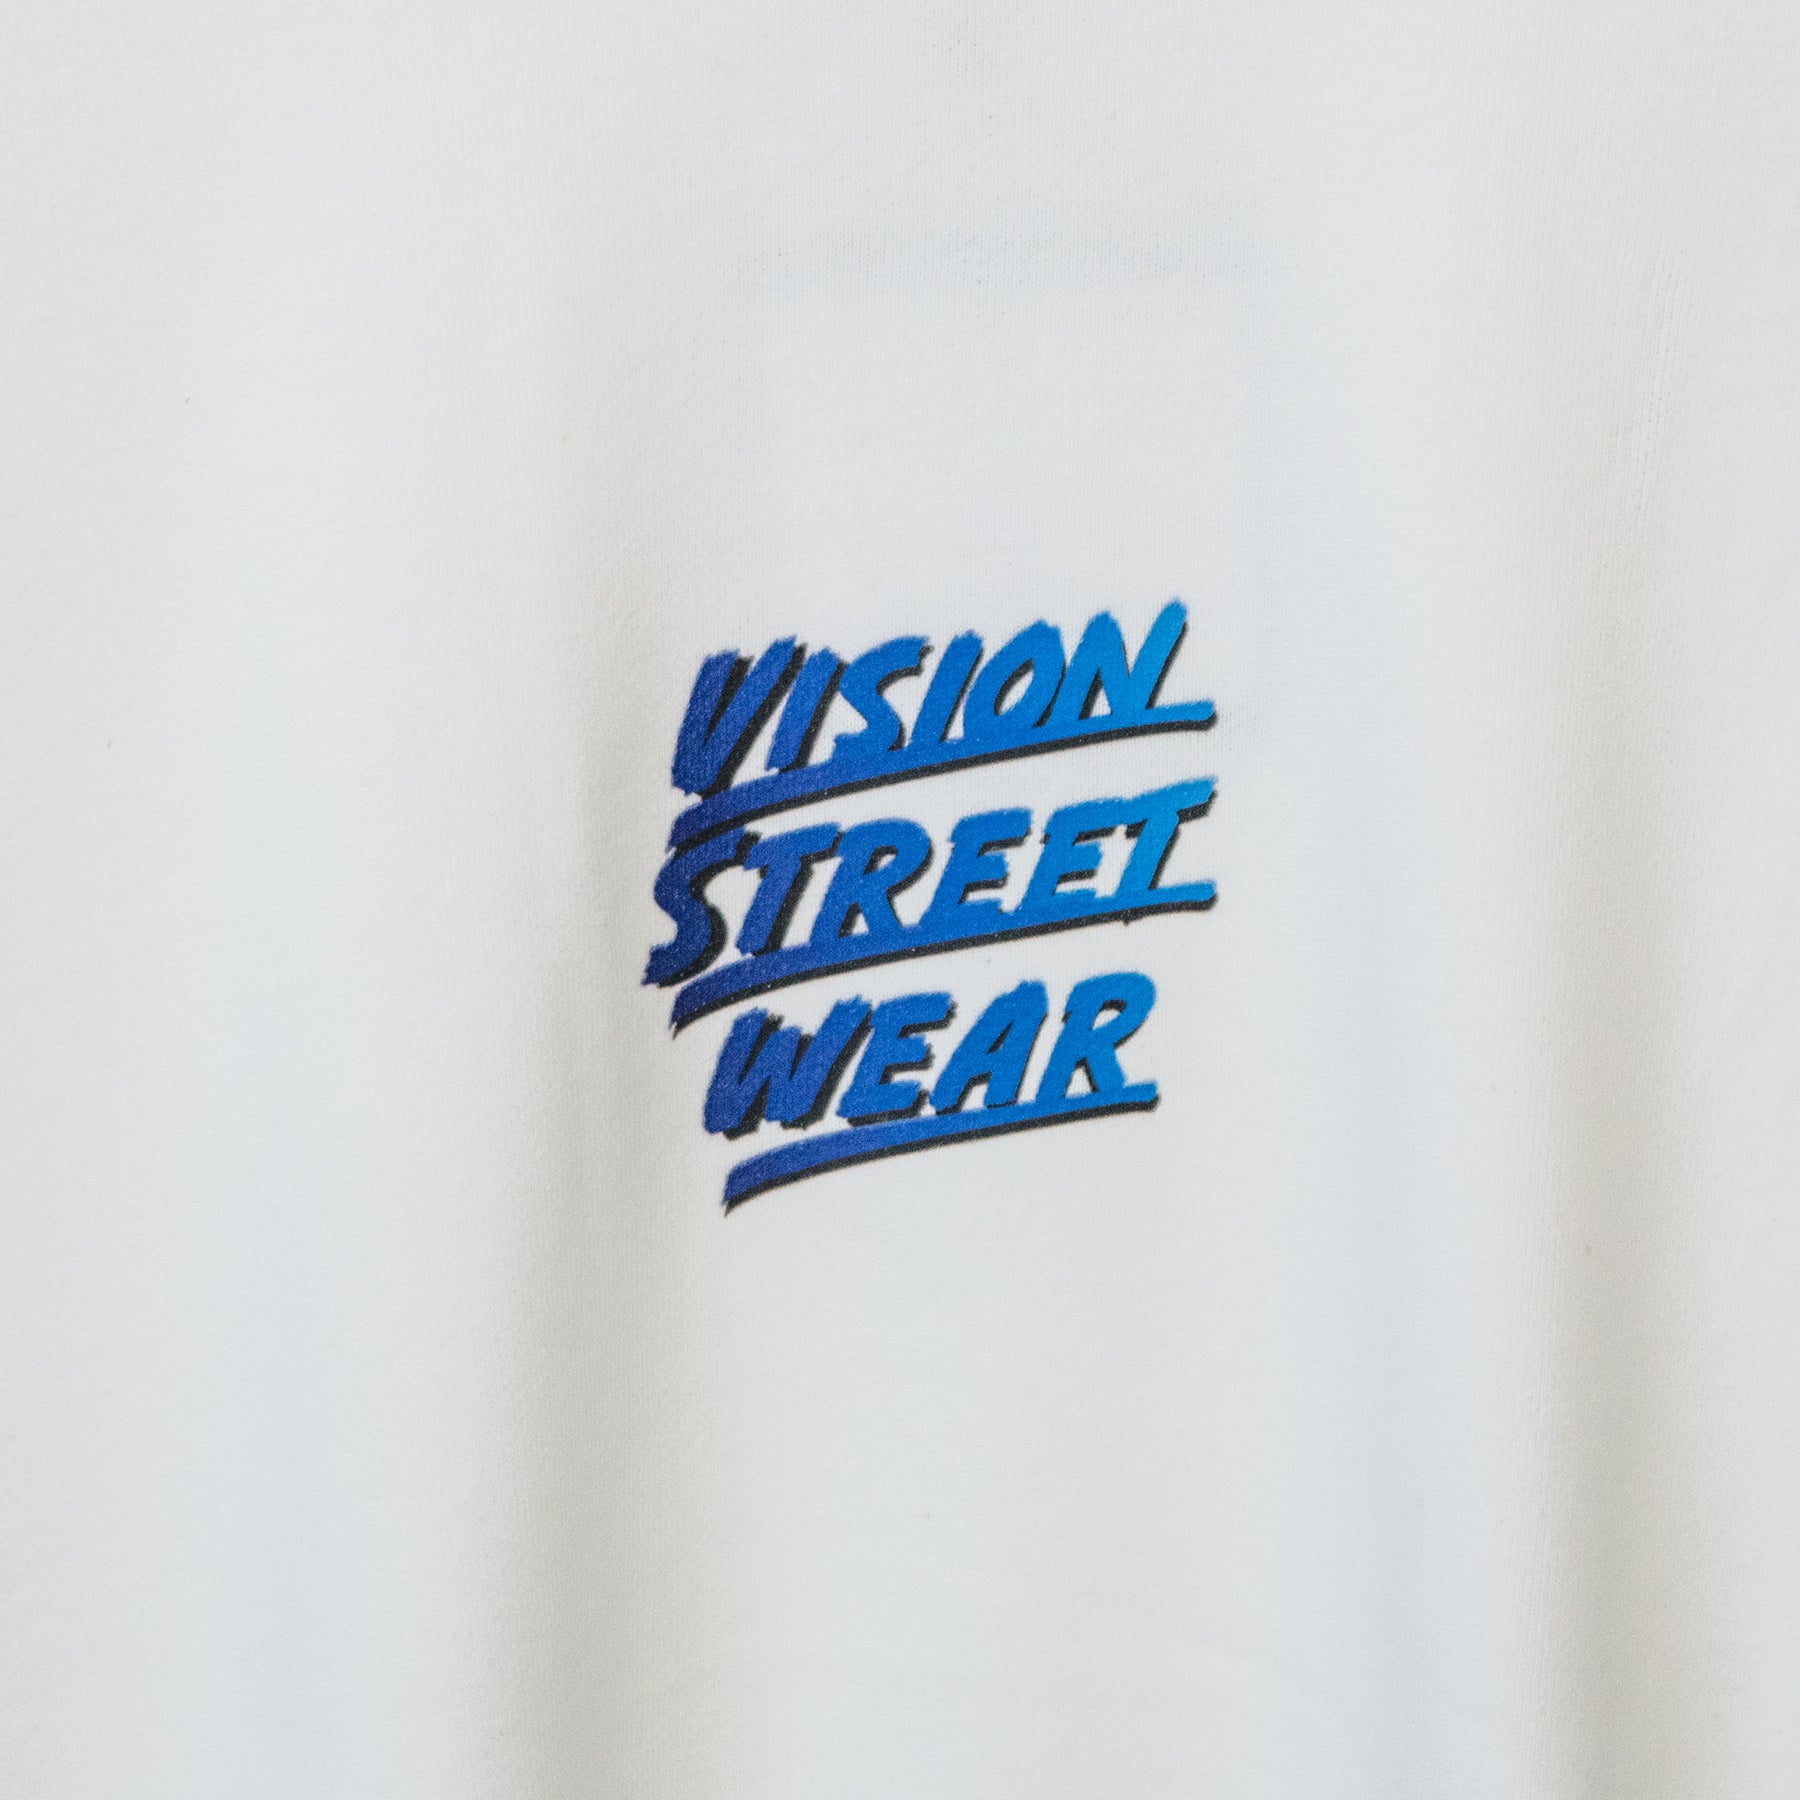 VISION STREET WEAR Arcade Game L/S Sweatshirt - YOUAREMYPOISON